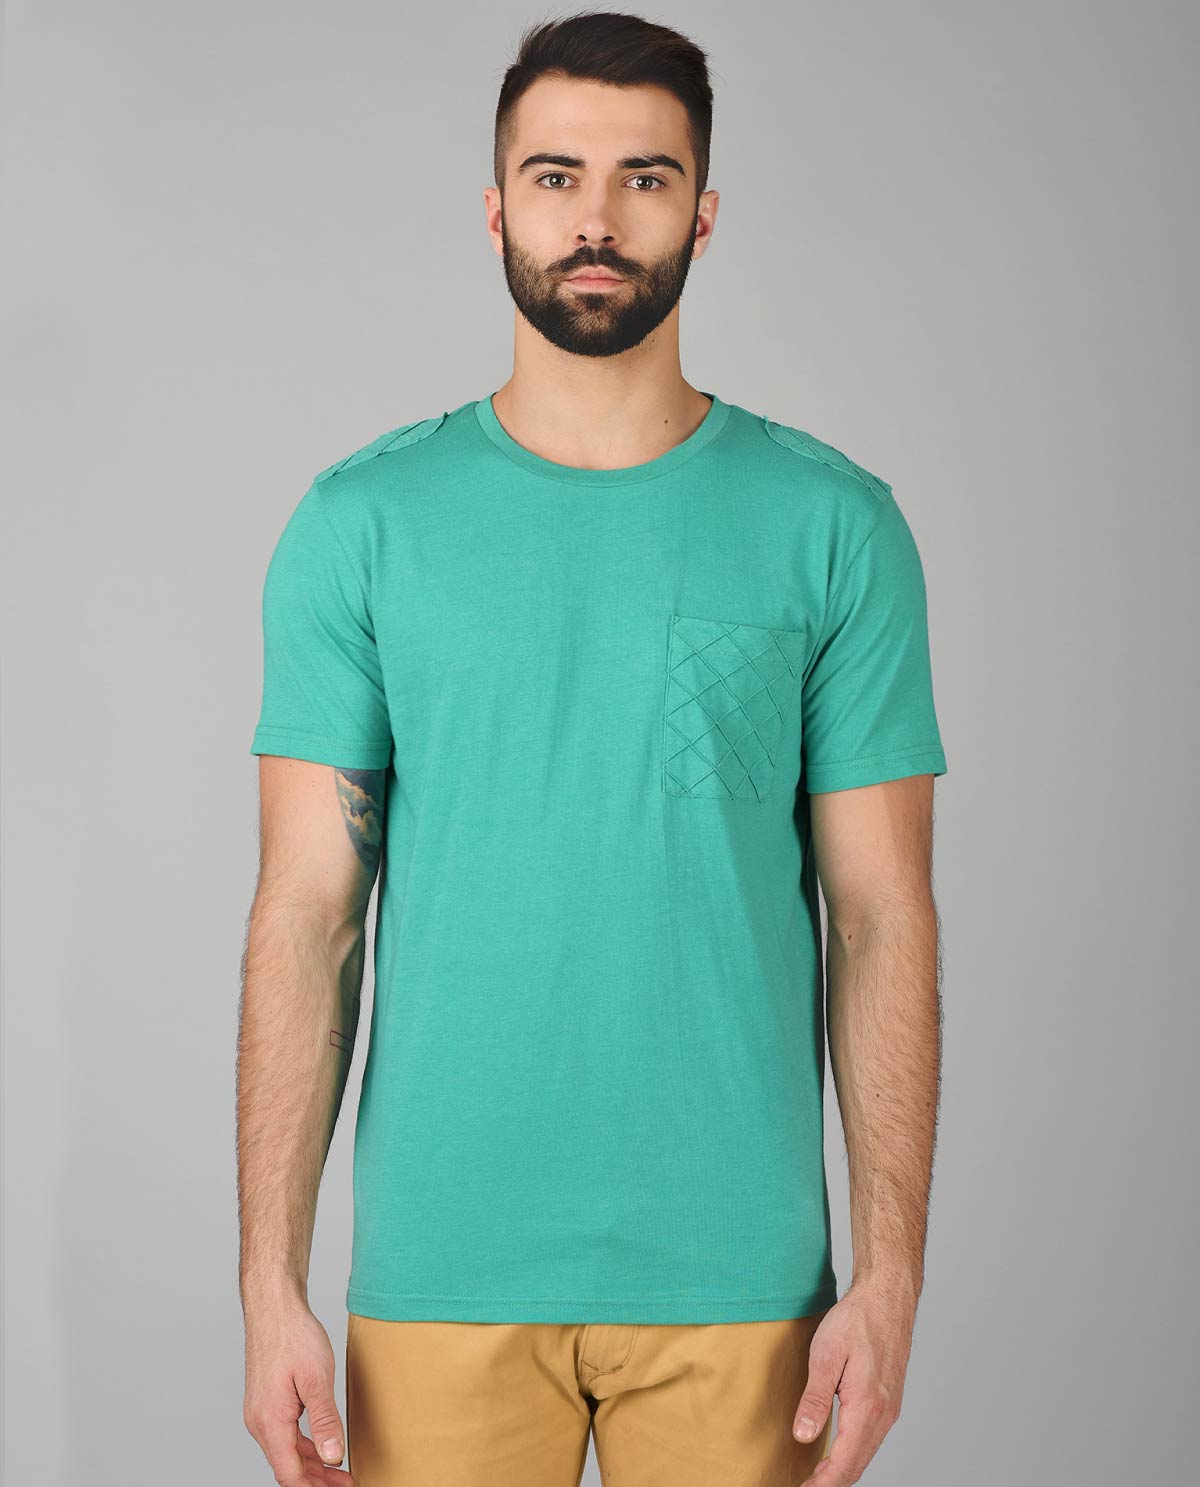 Pintuck Patch T-Shirt - Kashvi Designs - MensWear Collections